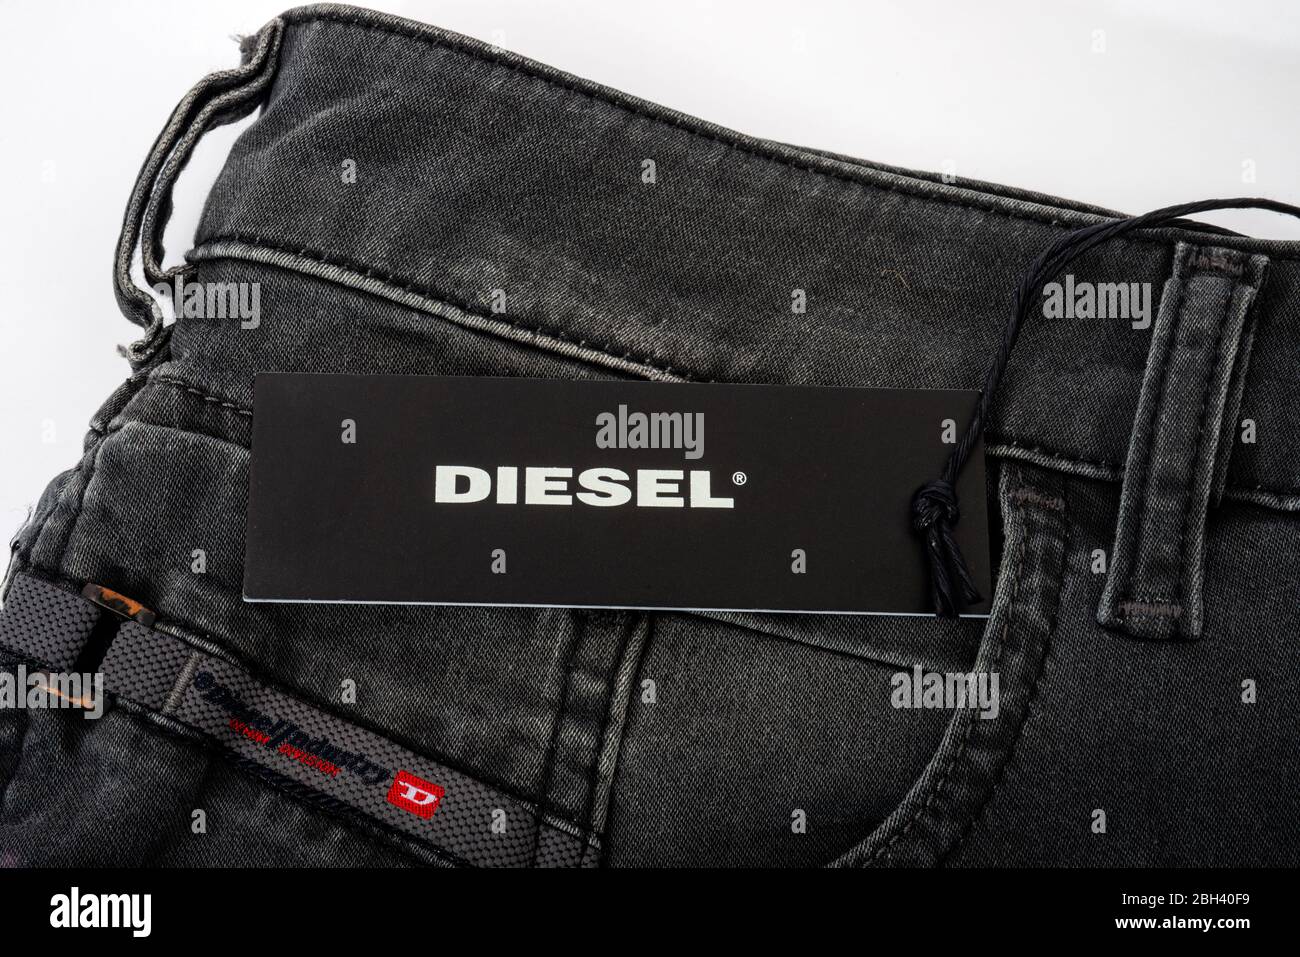 Mens Diesel jeans Stock Photo - Alamy